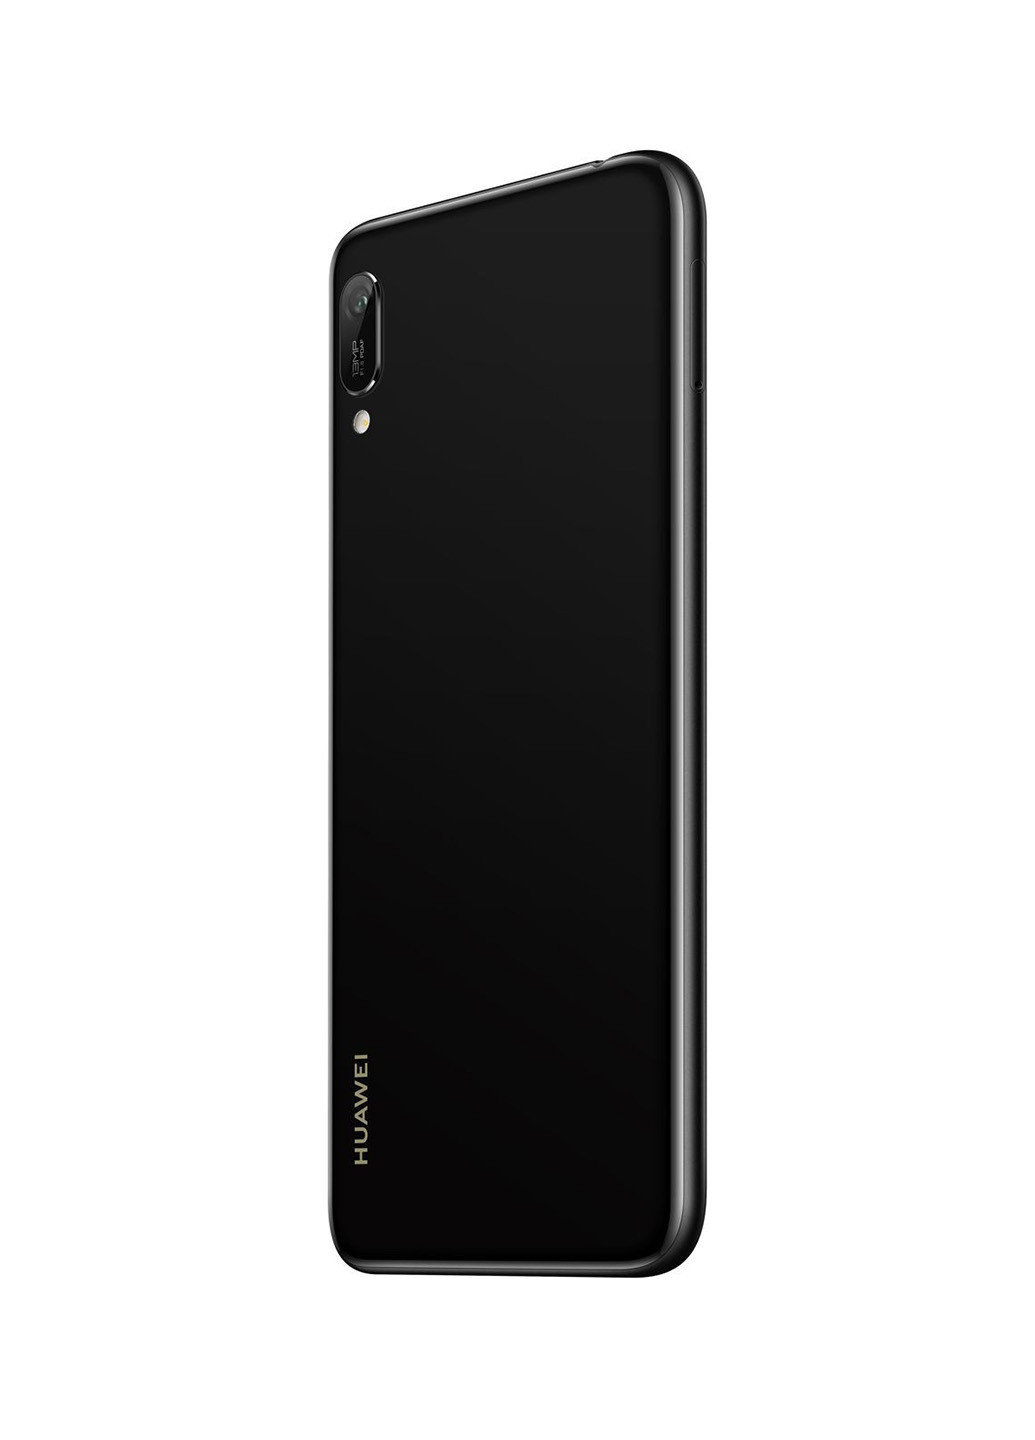 Смартфон Y6 2019 2 / 32GB Midnight Black (MRD-Lх1) Huawei y6 2019 2/32gb midnight black (mrd-lх1) (163174118)